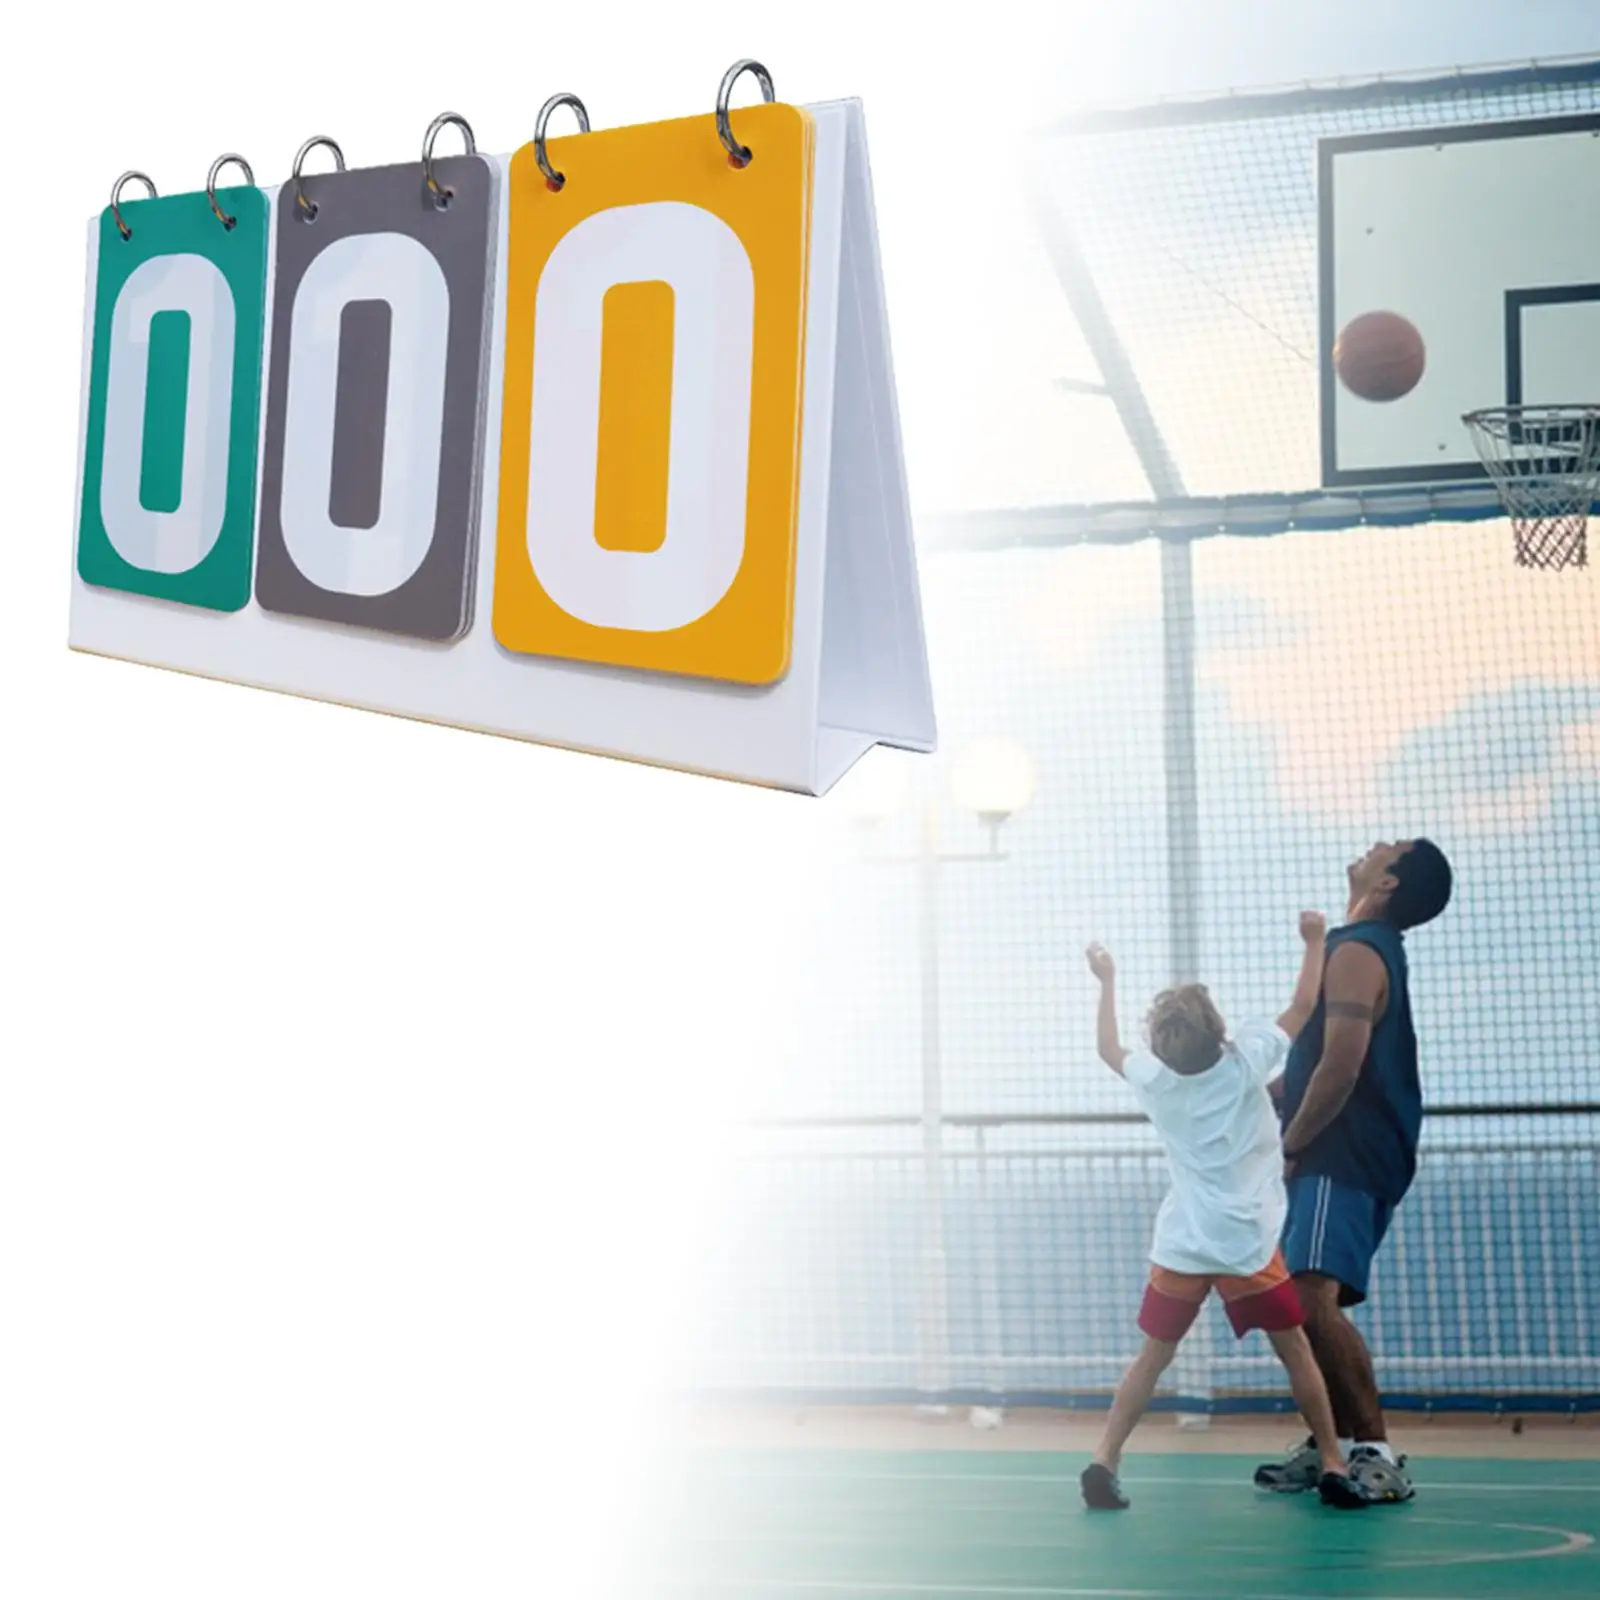 Sports Scoreboard 3 digits Tabletop Score Flippers Flip Score Board for Competition Badminton Tennis Ball Football Volleyball